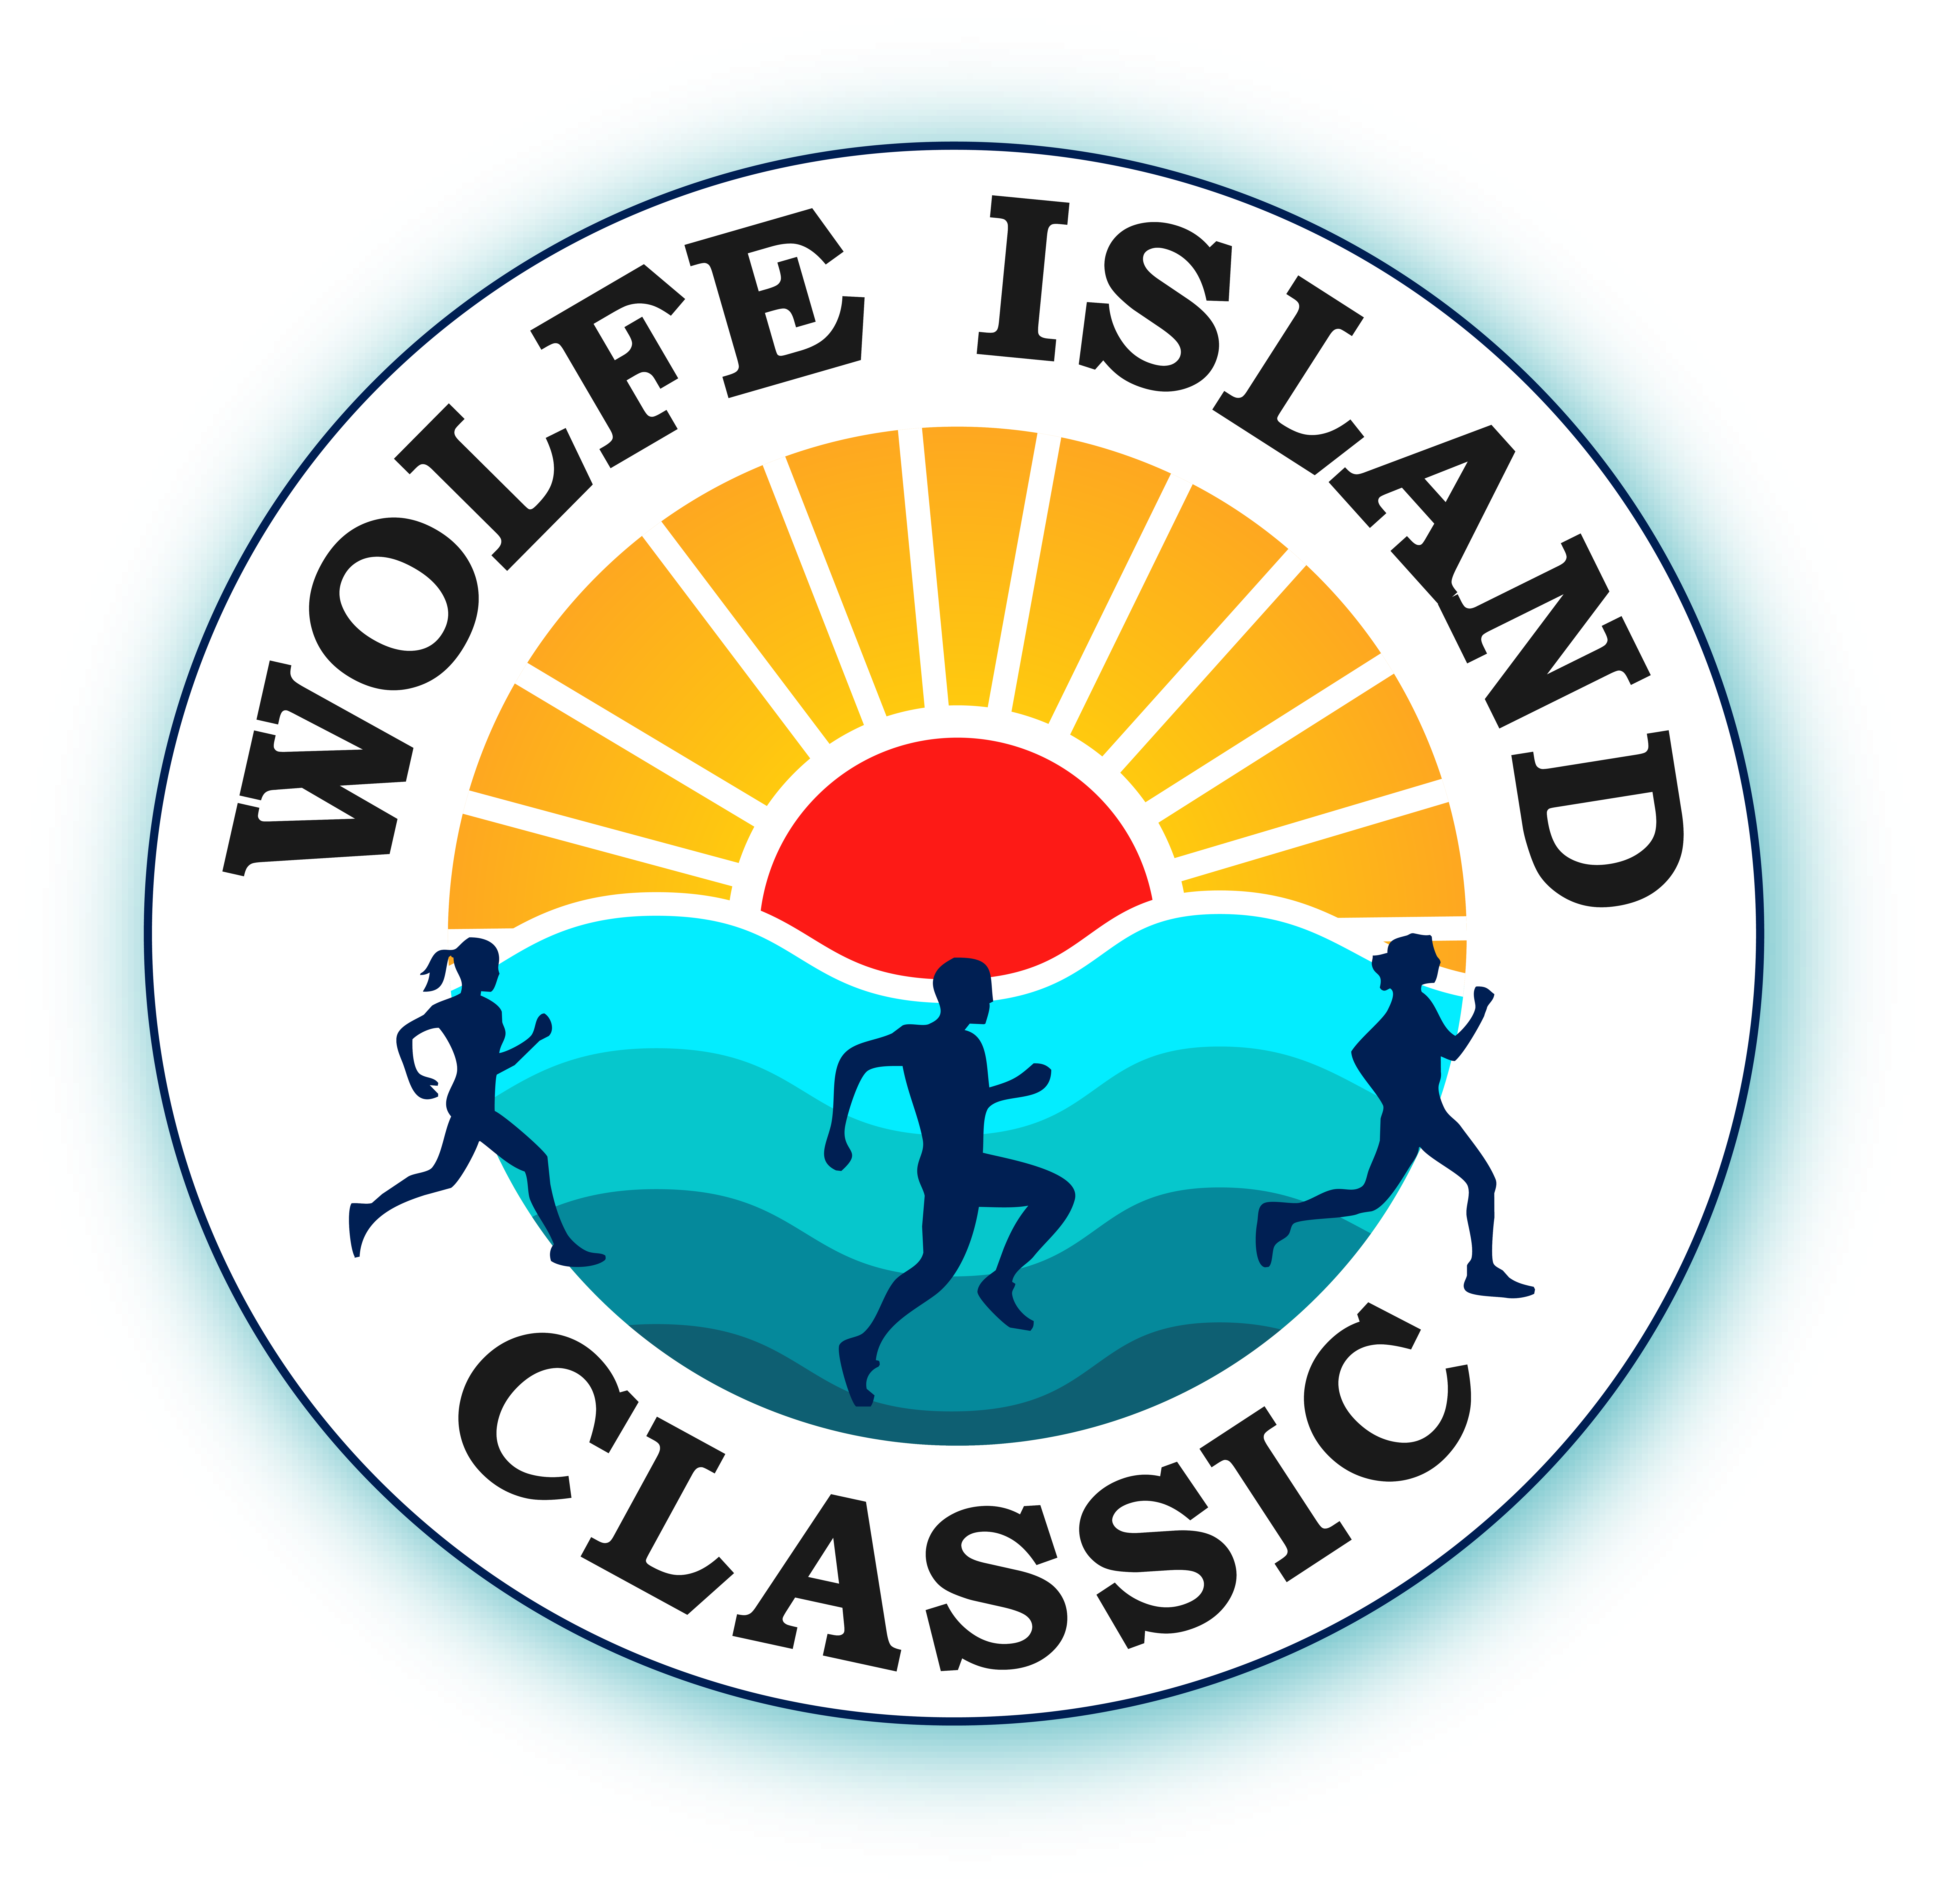 Wolfe Island Classic T-Shirts